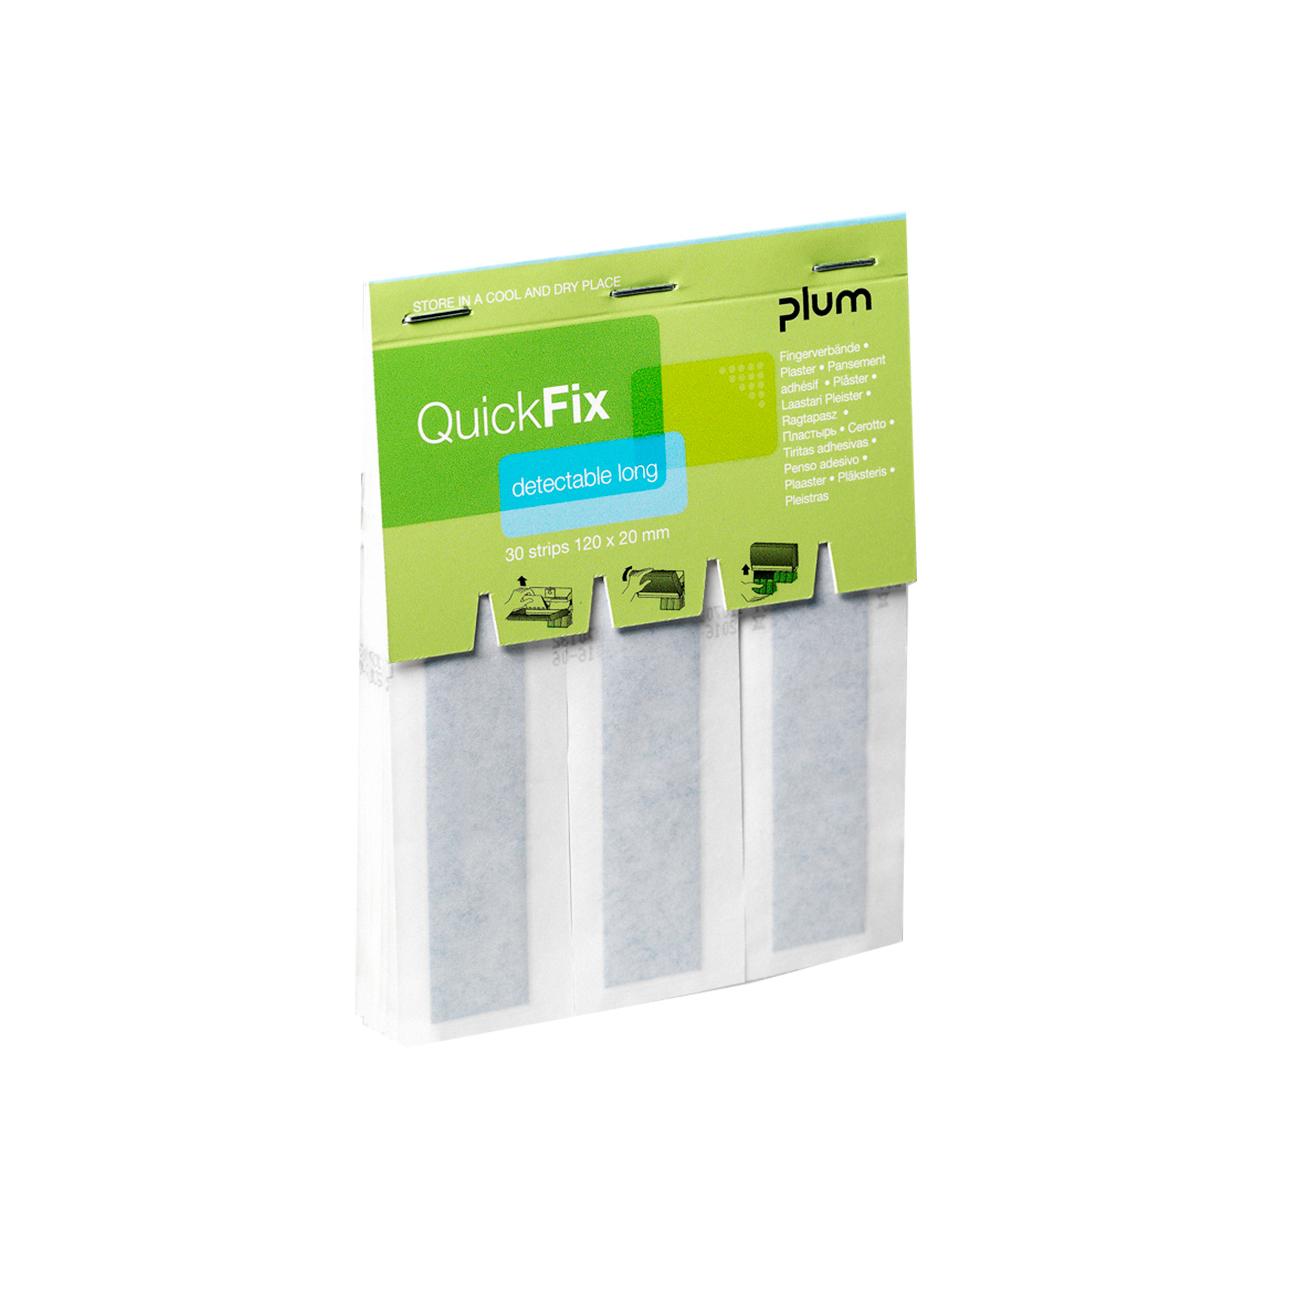 Plum QuickFix Detectable Long Pflasterrefill (30 Stück)